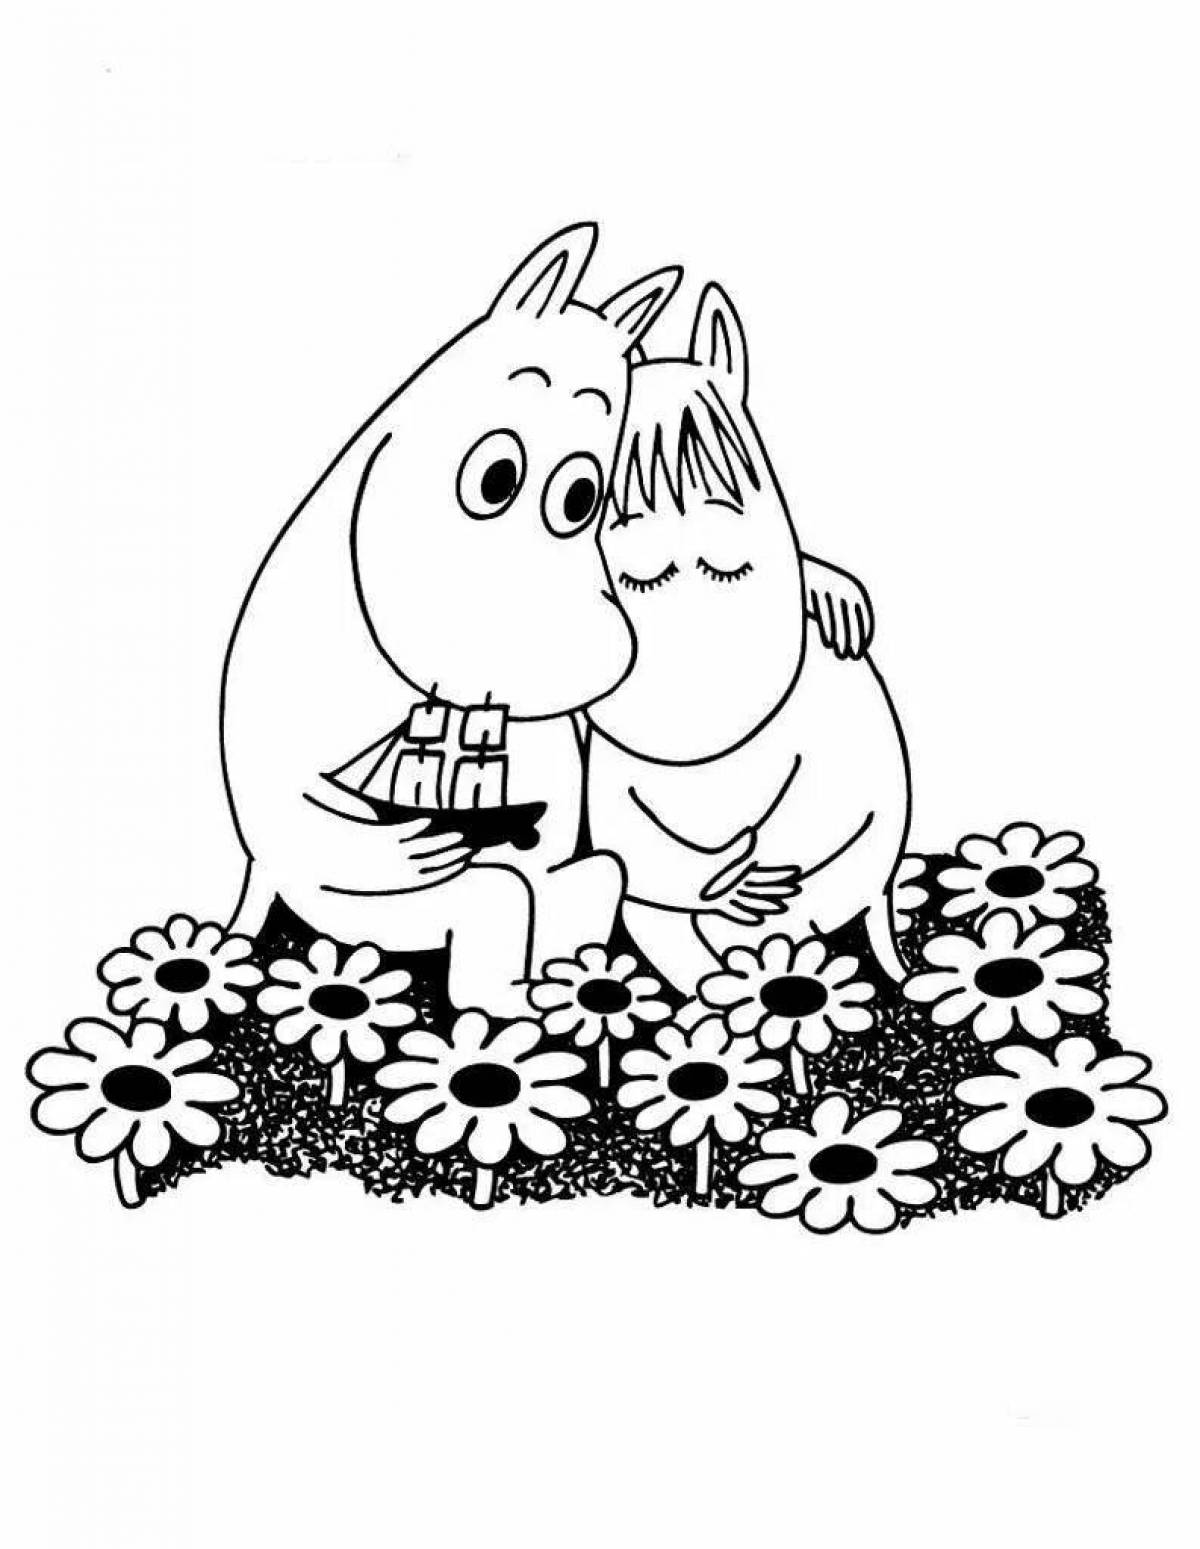 Furious Moomin coloring page